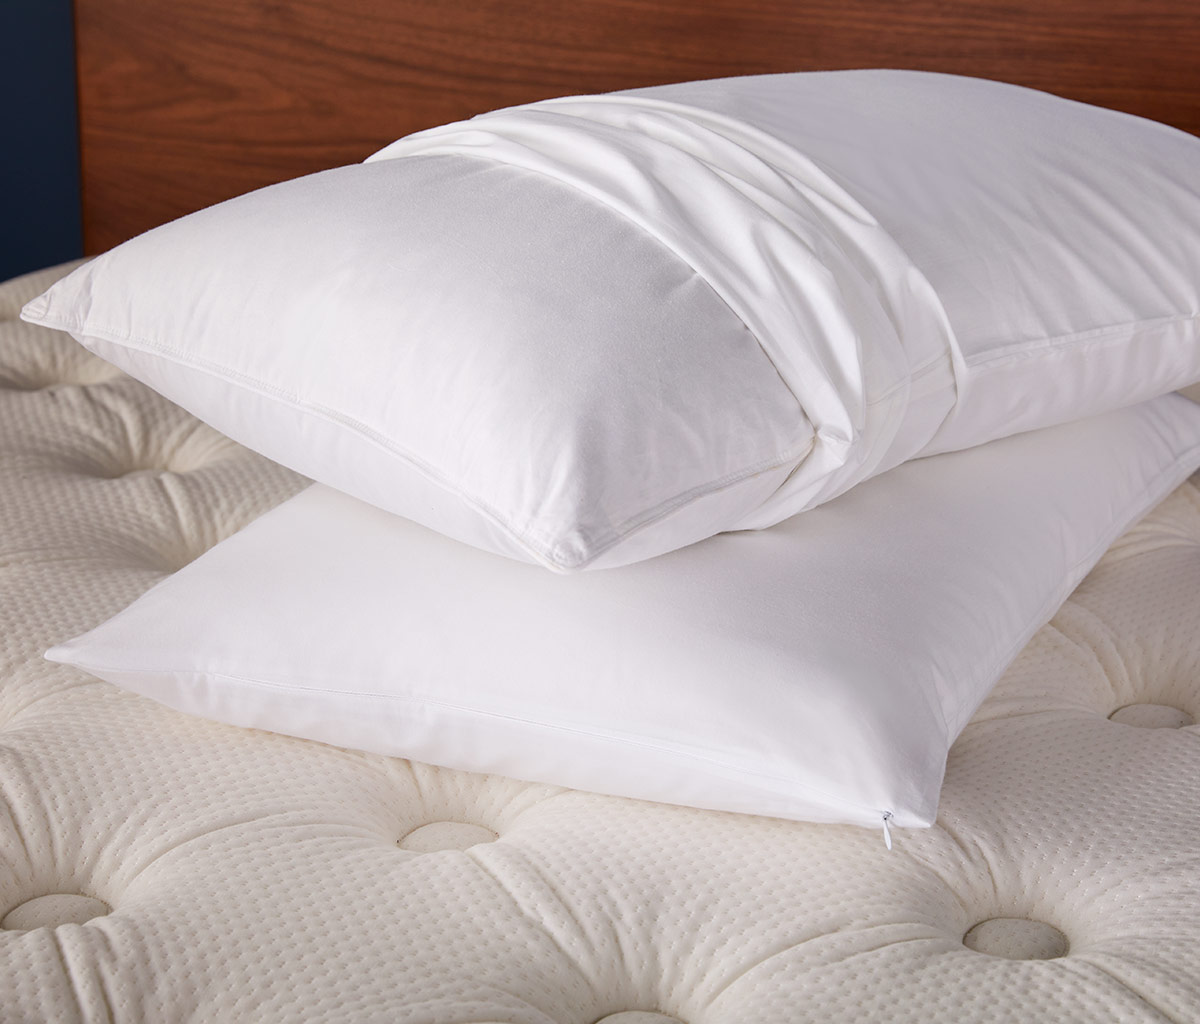 https://www.shoplemeridien.com/images/products/xlrg/le-meridien-pillow-protector-LEM-107-PLLWPRO-COTN_xlrg.jpg